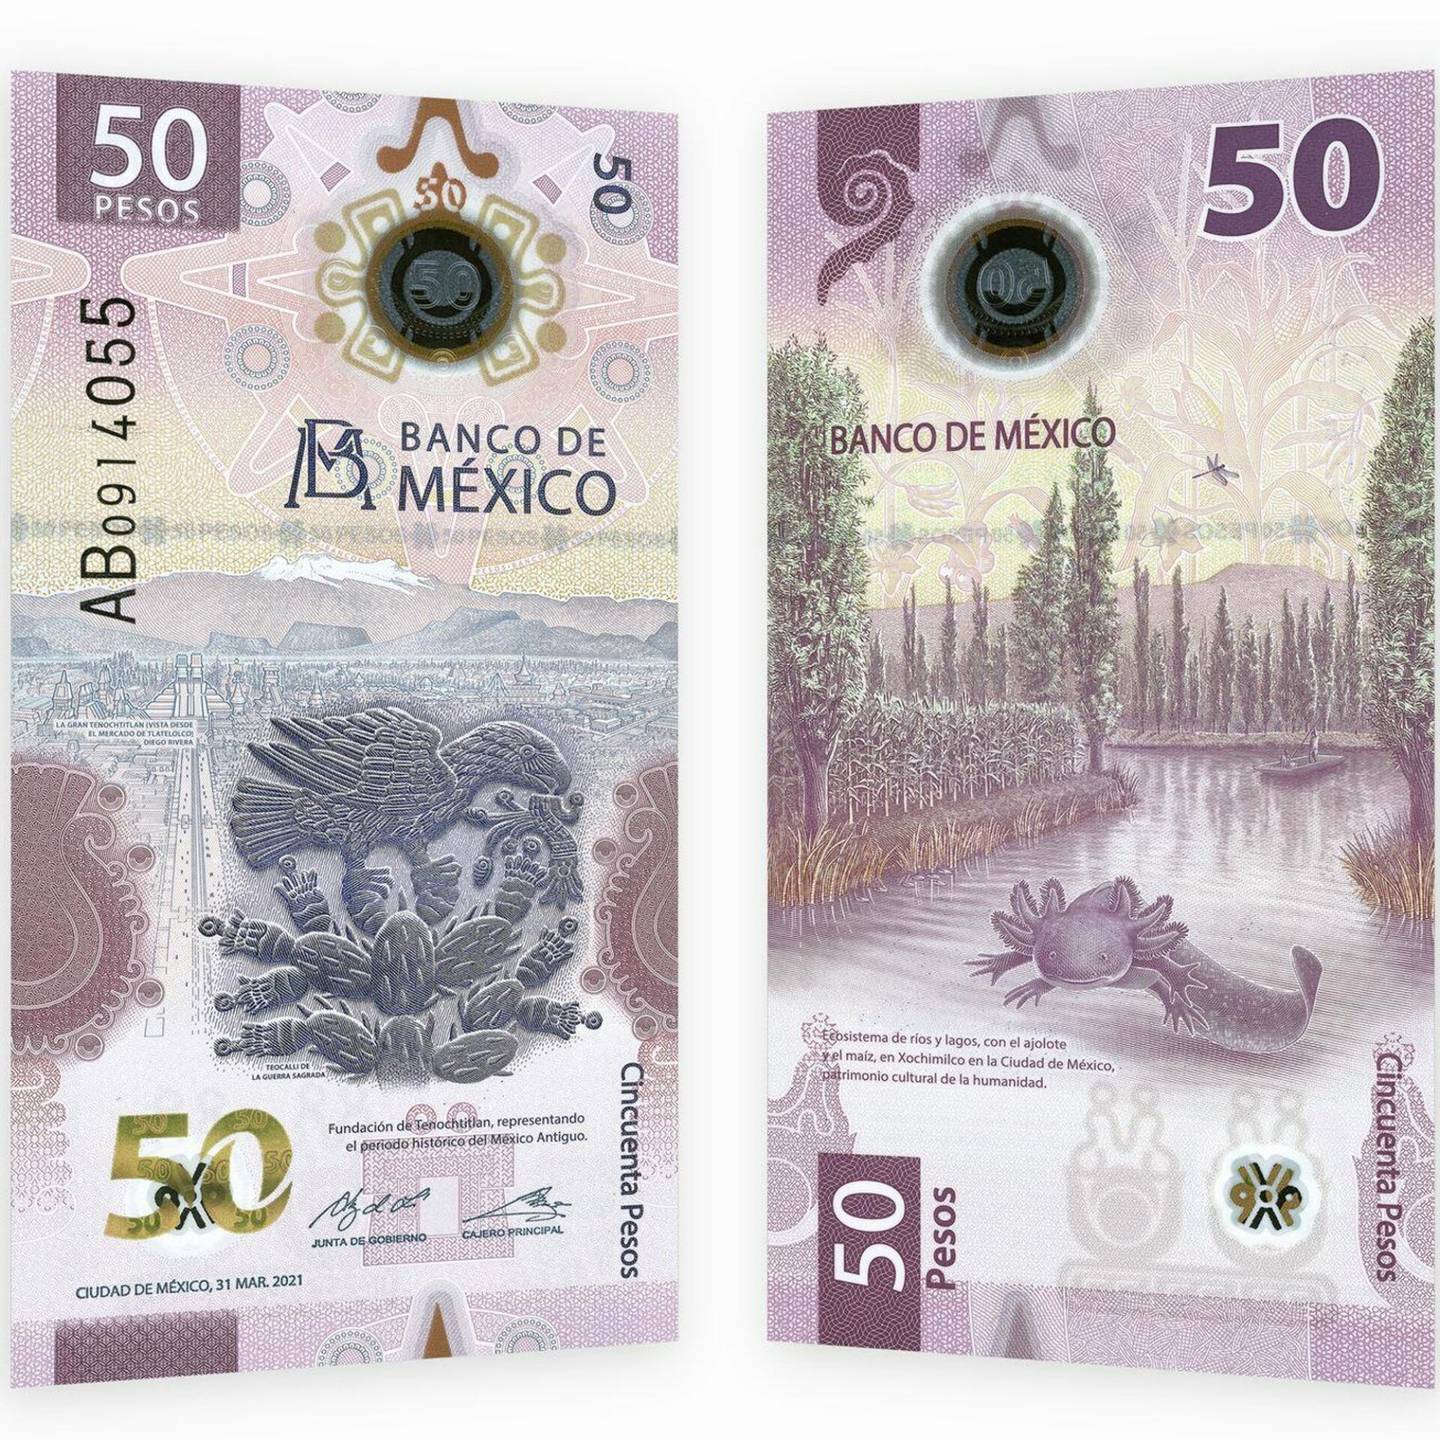 50 peso bill from Mexico